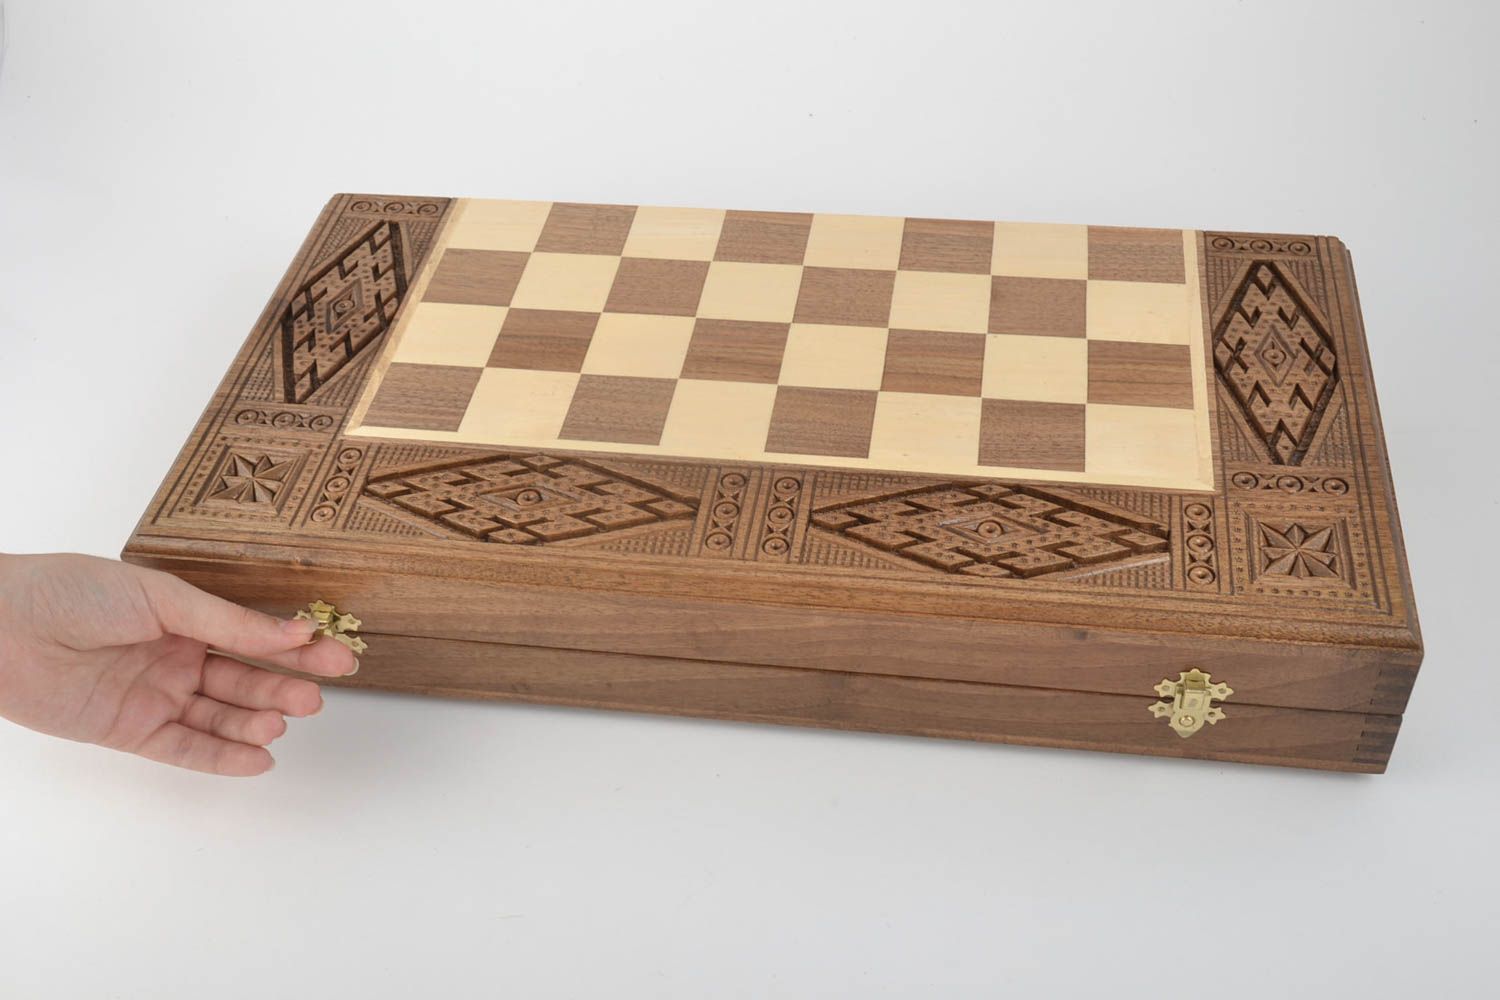 Beautiful handmade wooden chessboard chess board design board games gift ideas photo 1